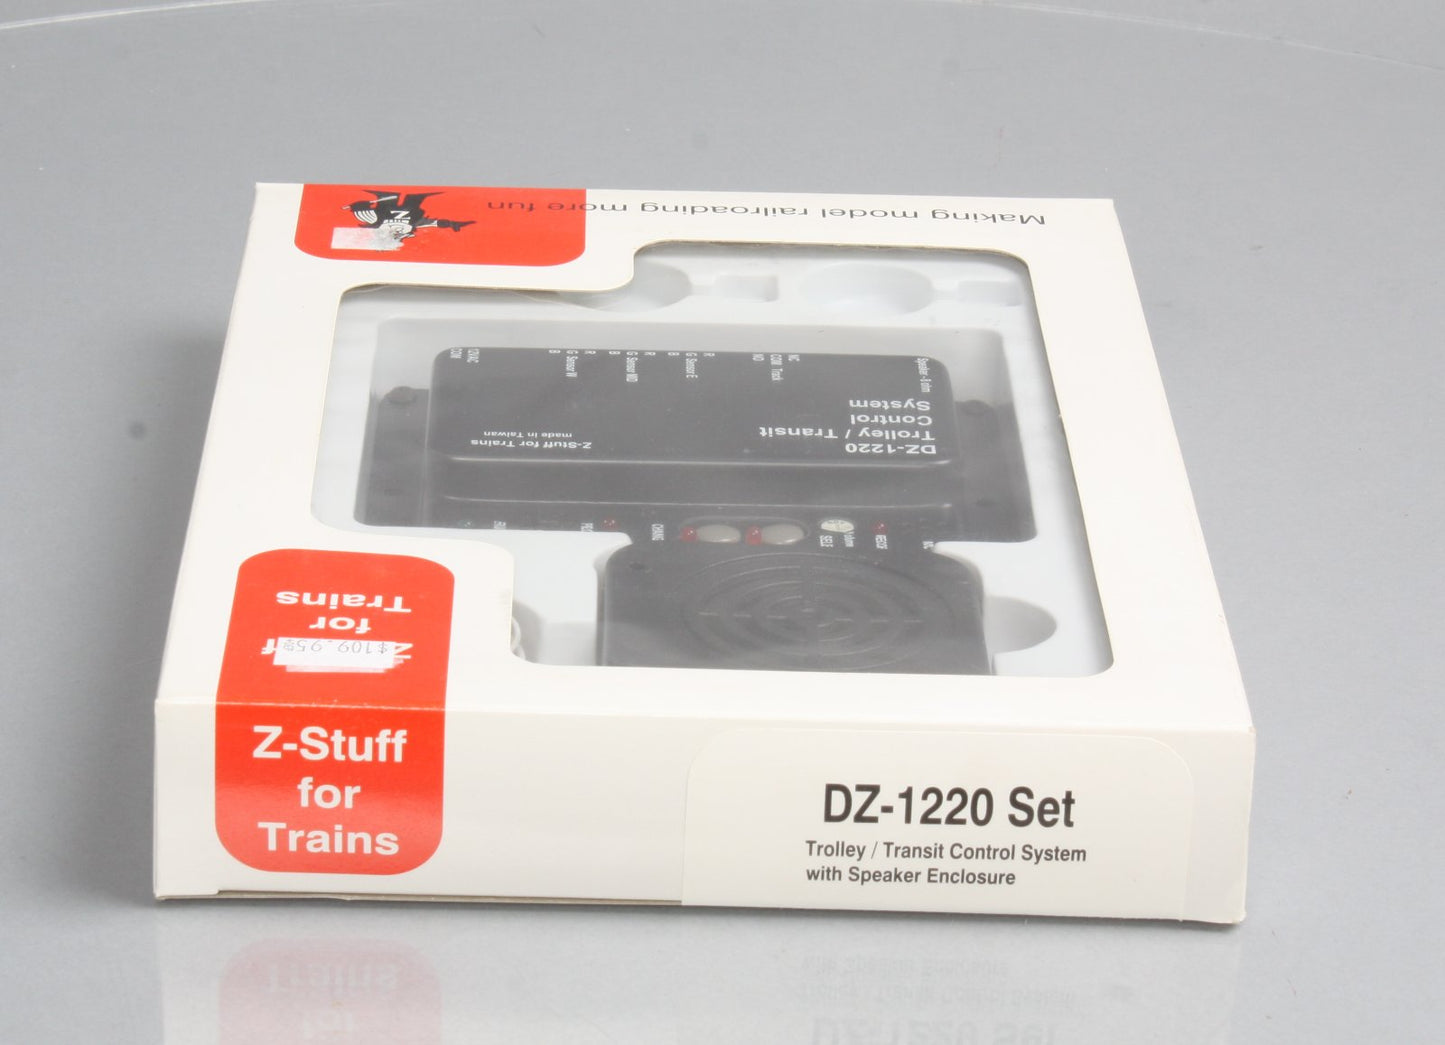 Z-Stuff DZ-1220 Trolley Stop & Controller Announcement System